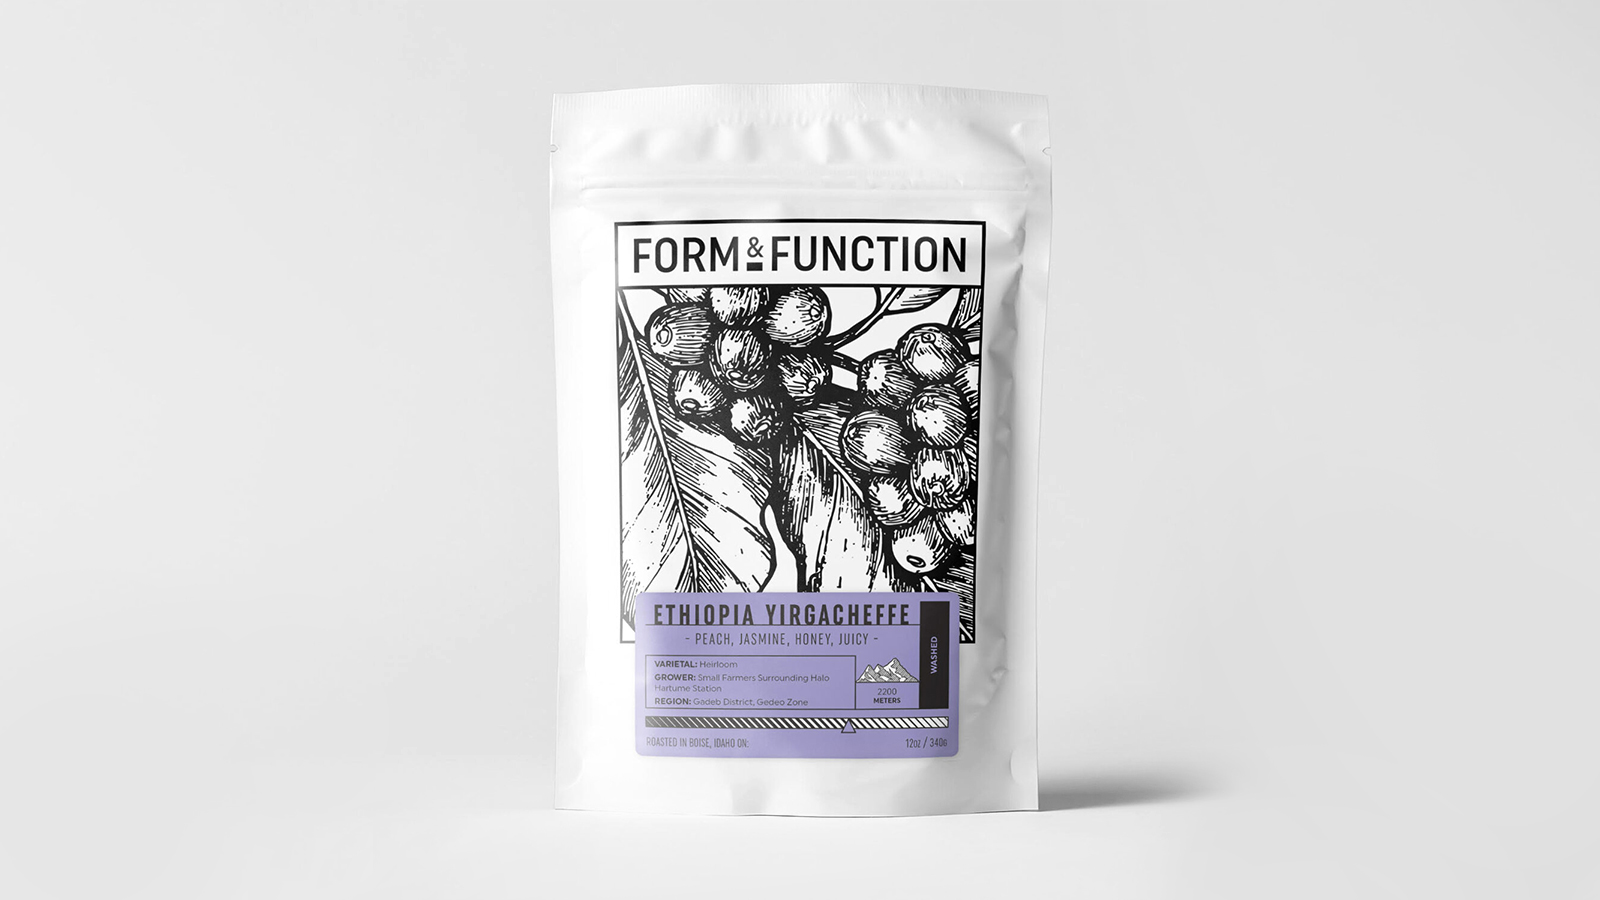 [3] Form & Function Ethiopia Yirgacheffe Coffee